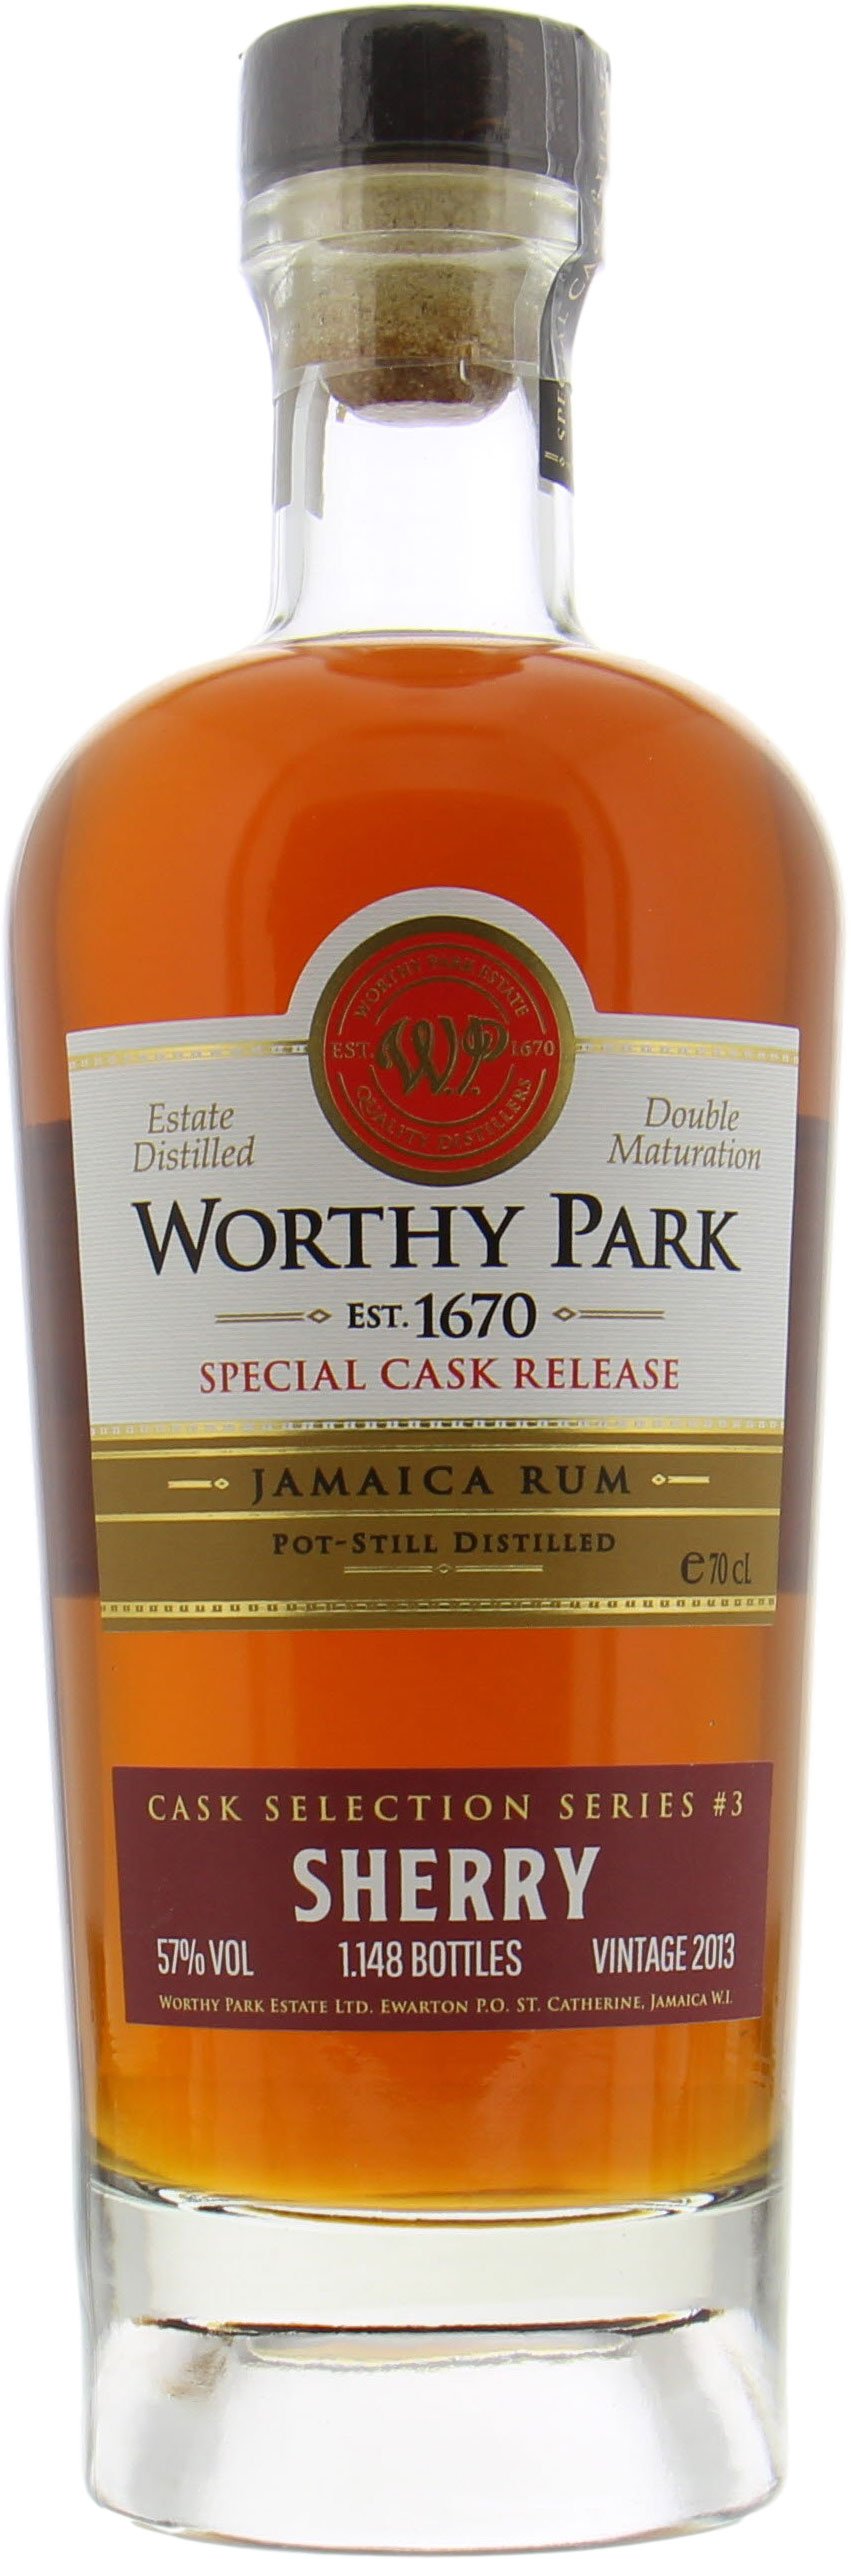 Worthy Park - Single Estate Sherry Cask Selection 57% 2013